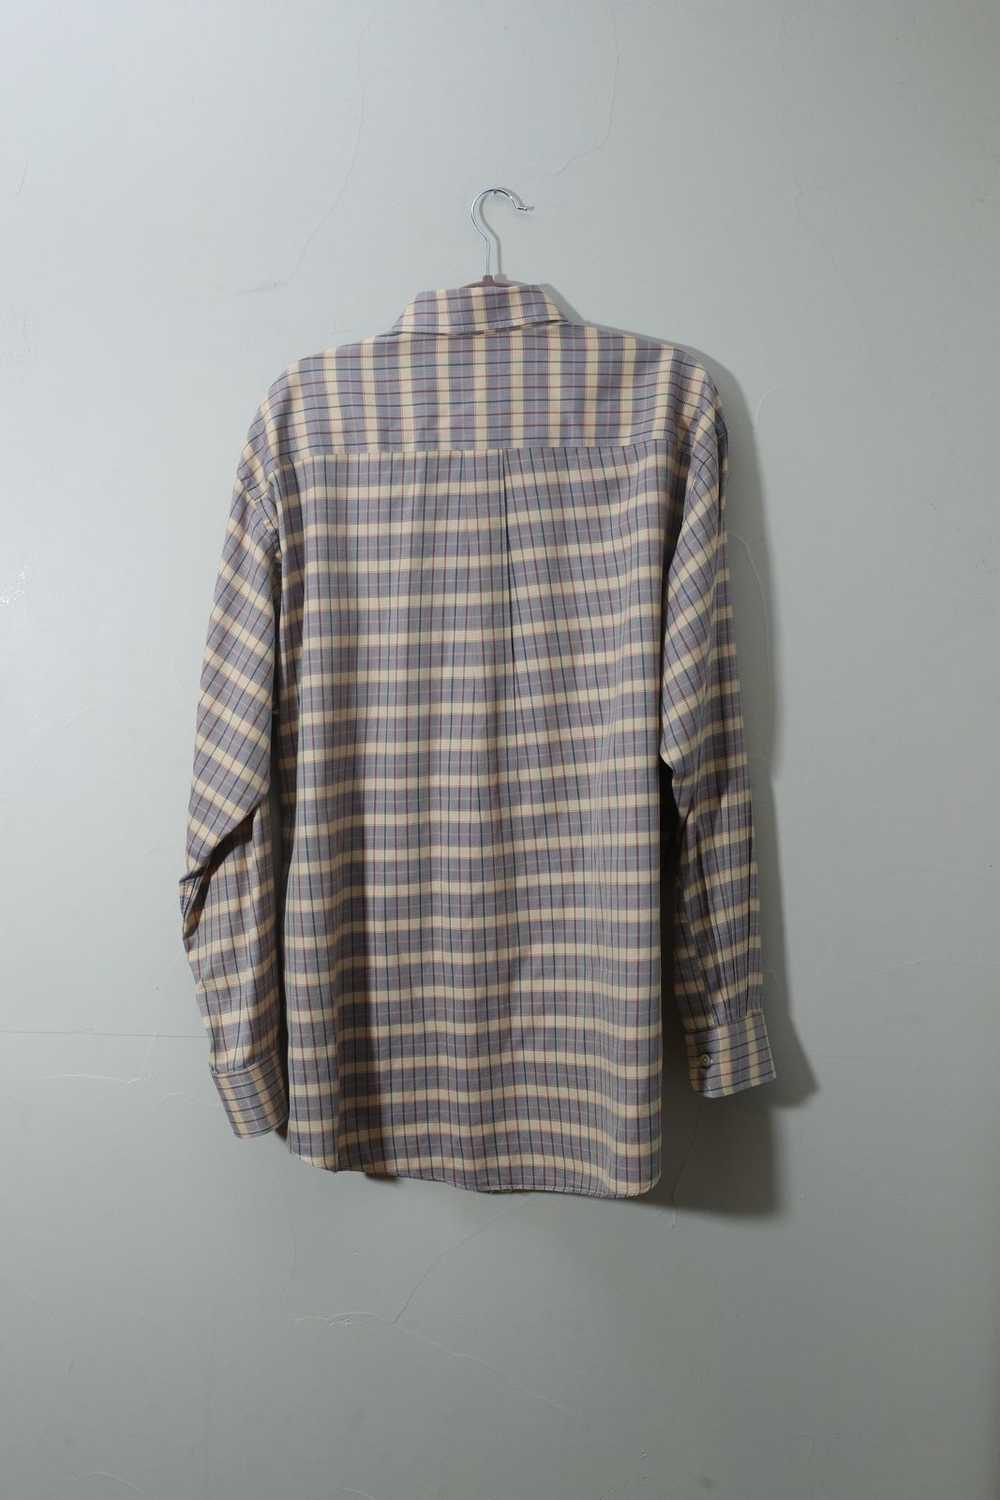 Burberry Burberry Plaid Button-down Shirt (XL) - image 2